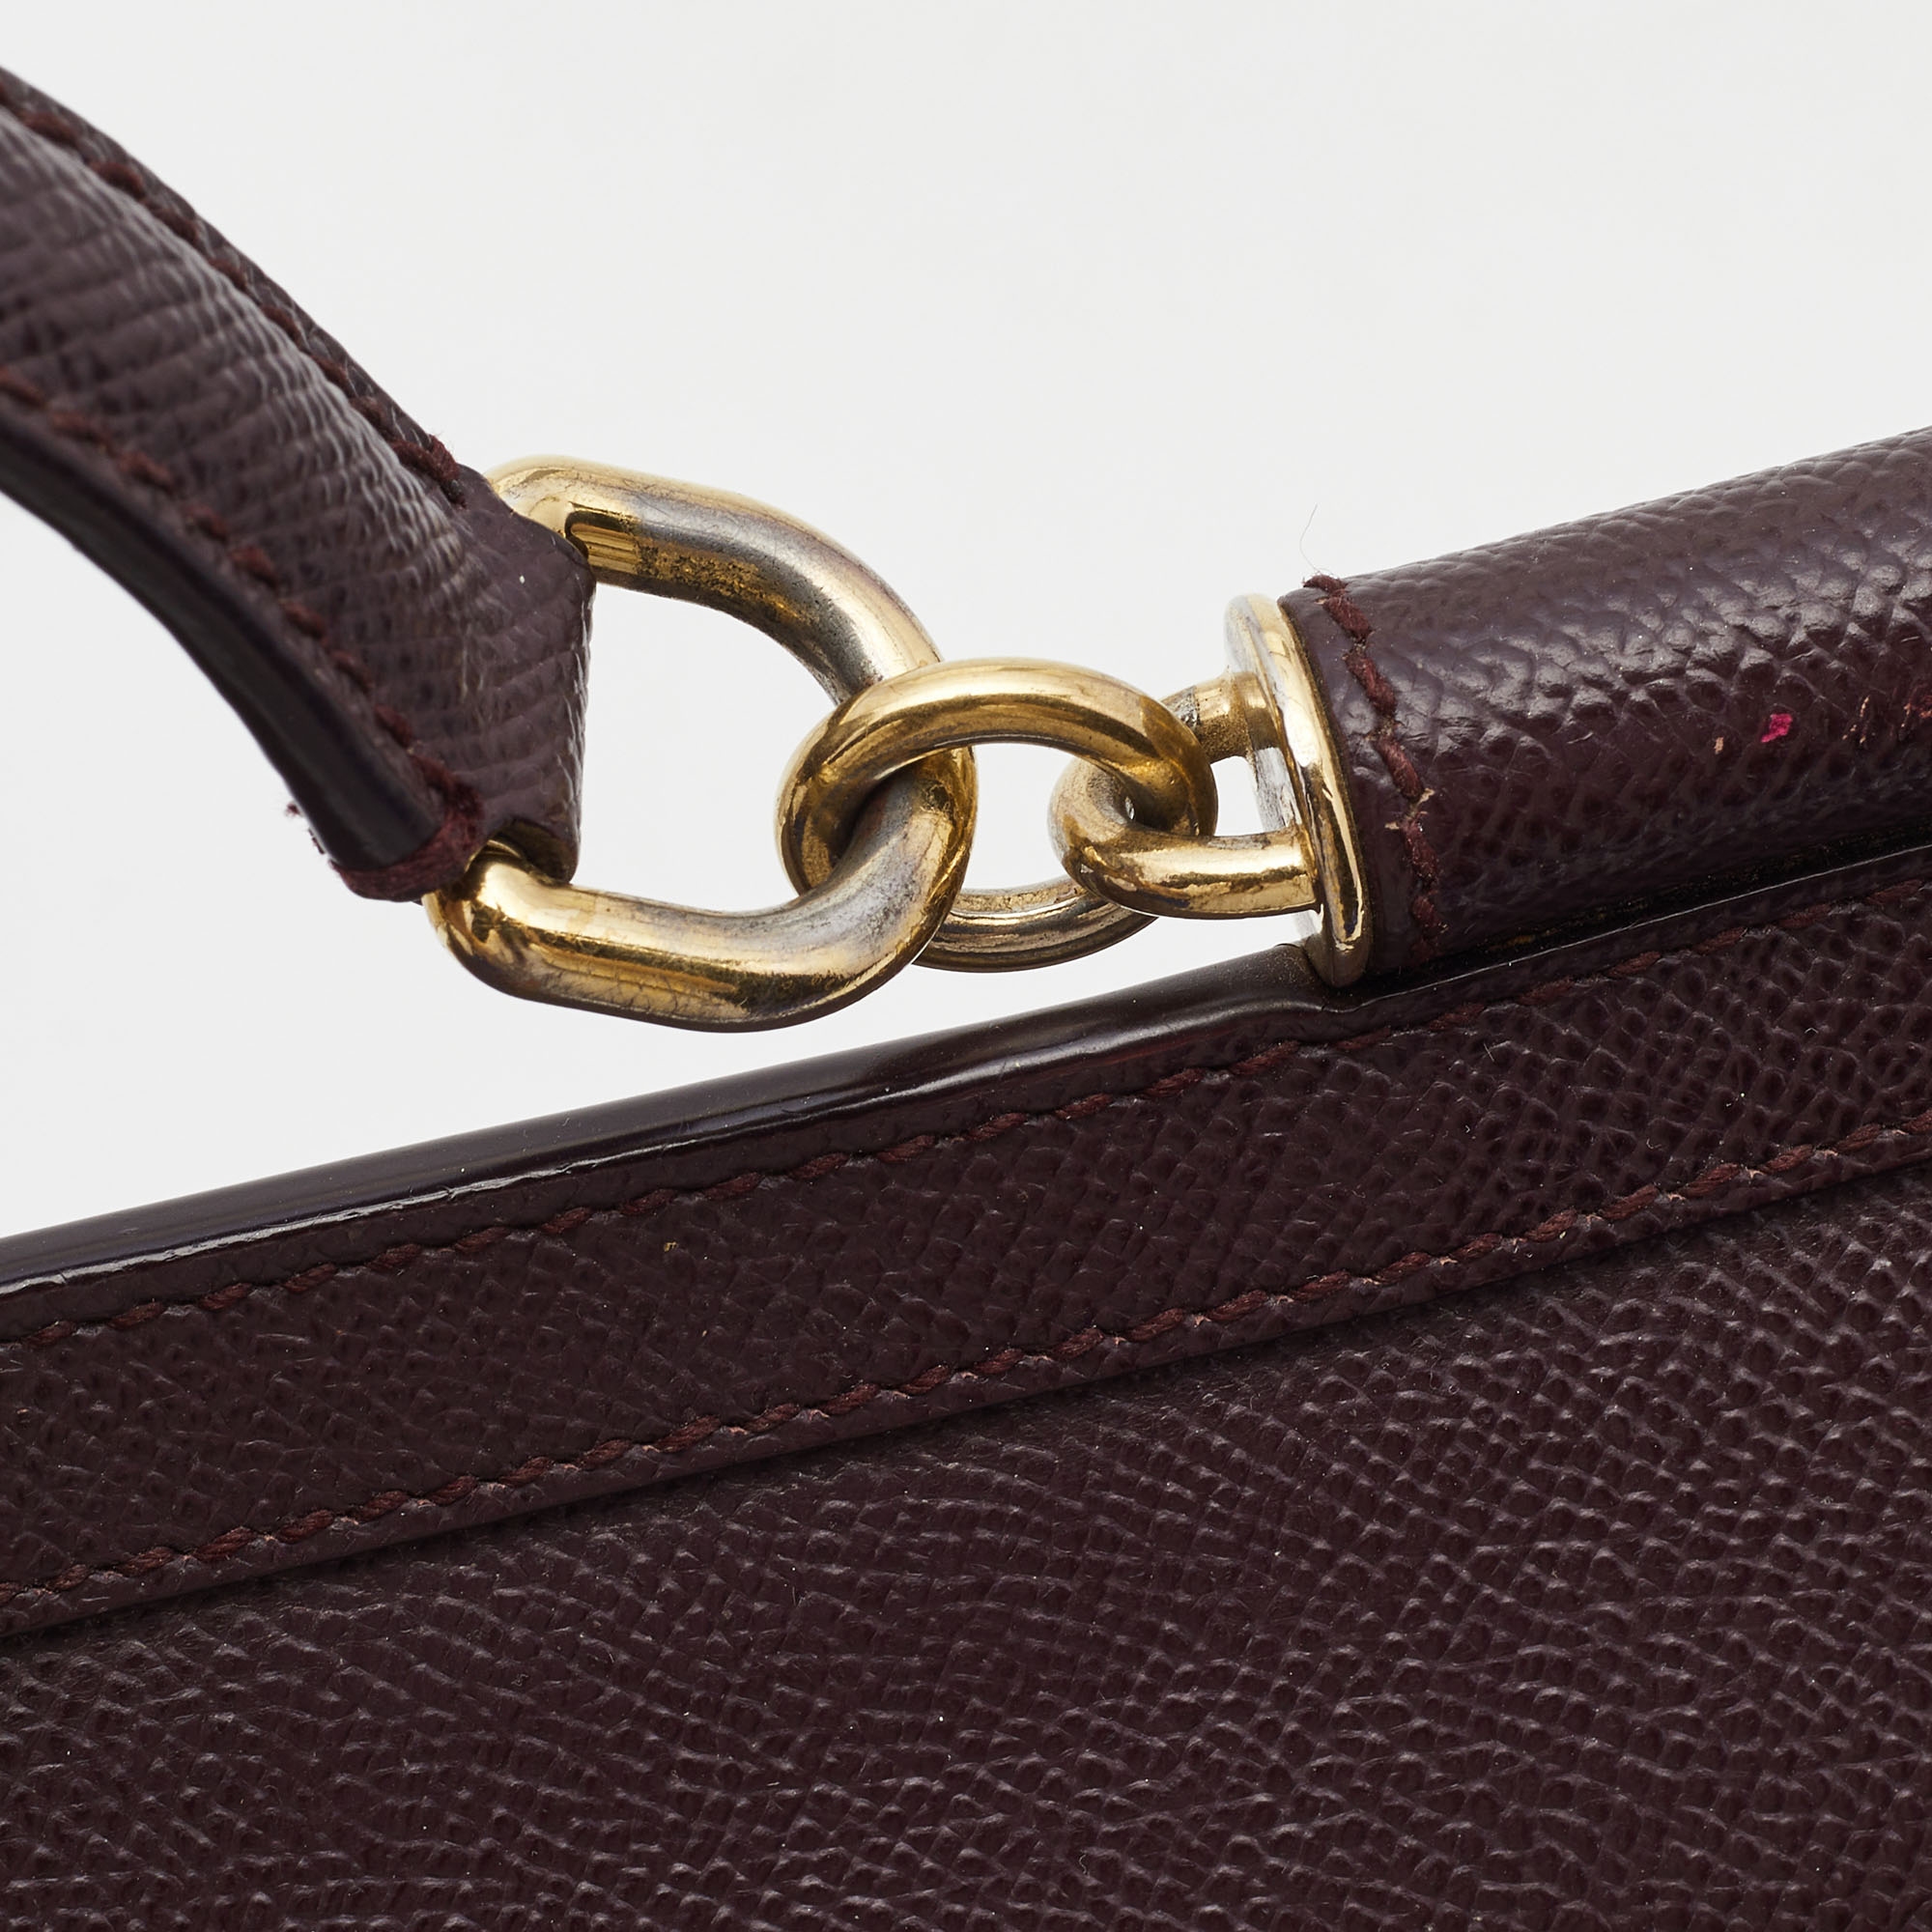 Dolce & Gabbana Burgundy Leather Medium Miss Sicily Top Handle Bag